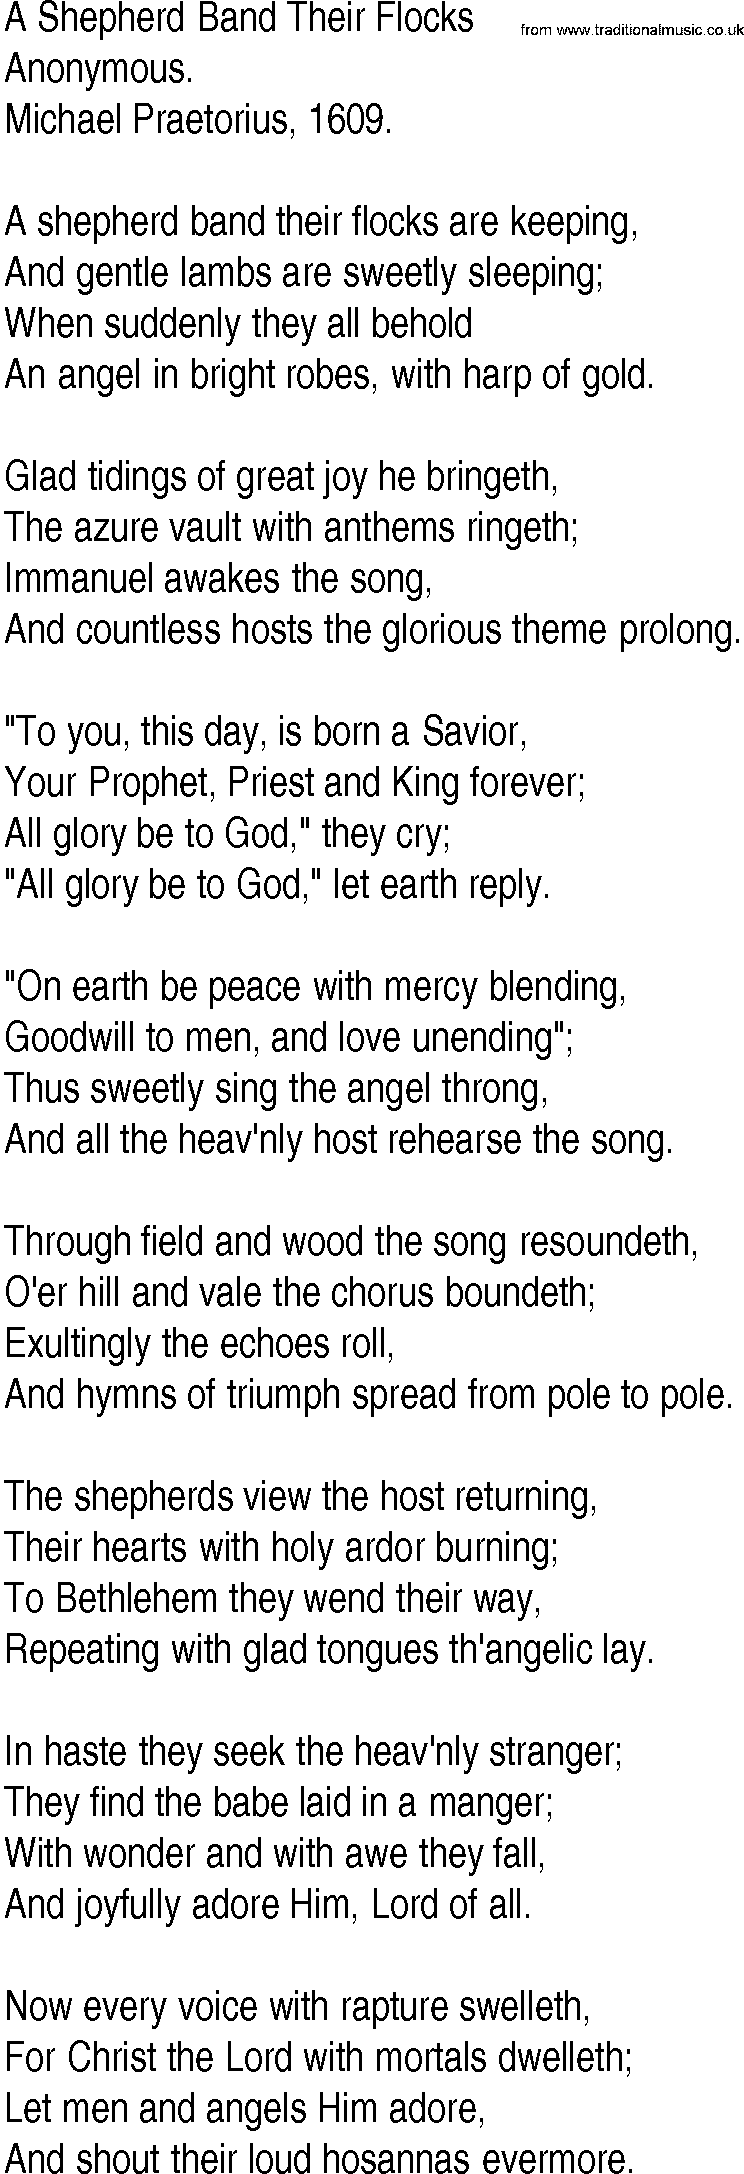 Hymn and Gospel Song: A Shepherd Band Their Flocks by Anonymous lyrics